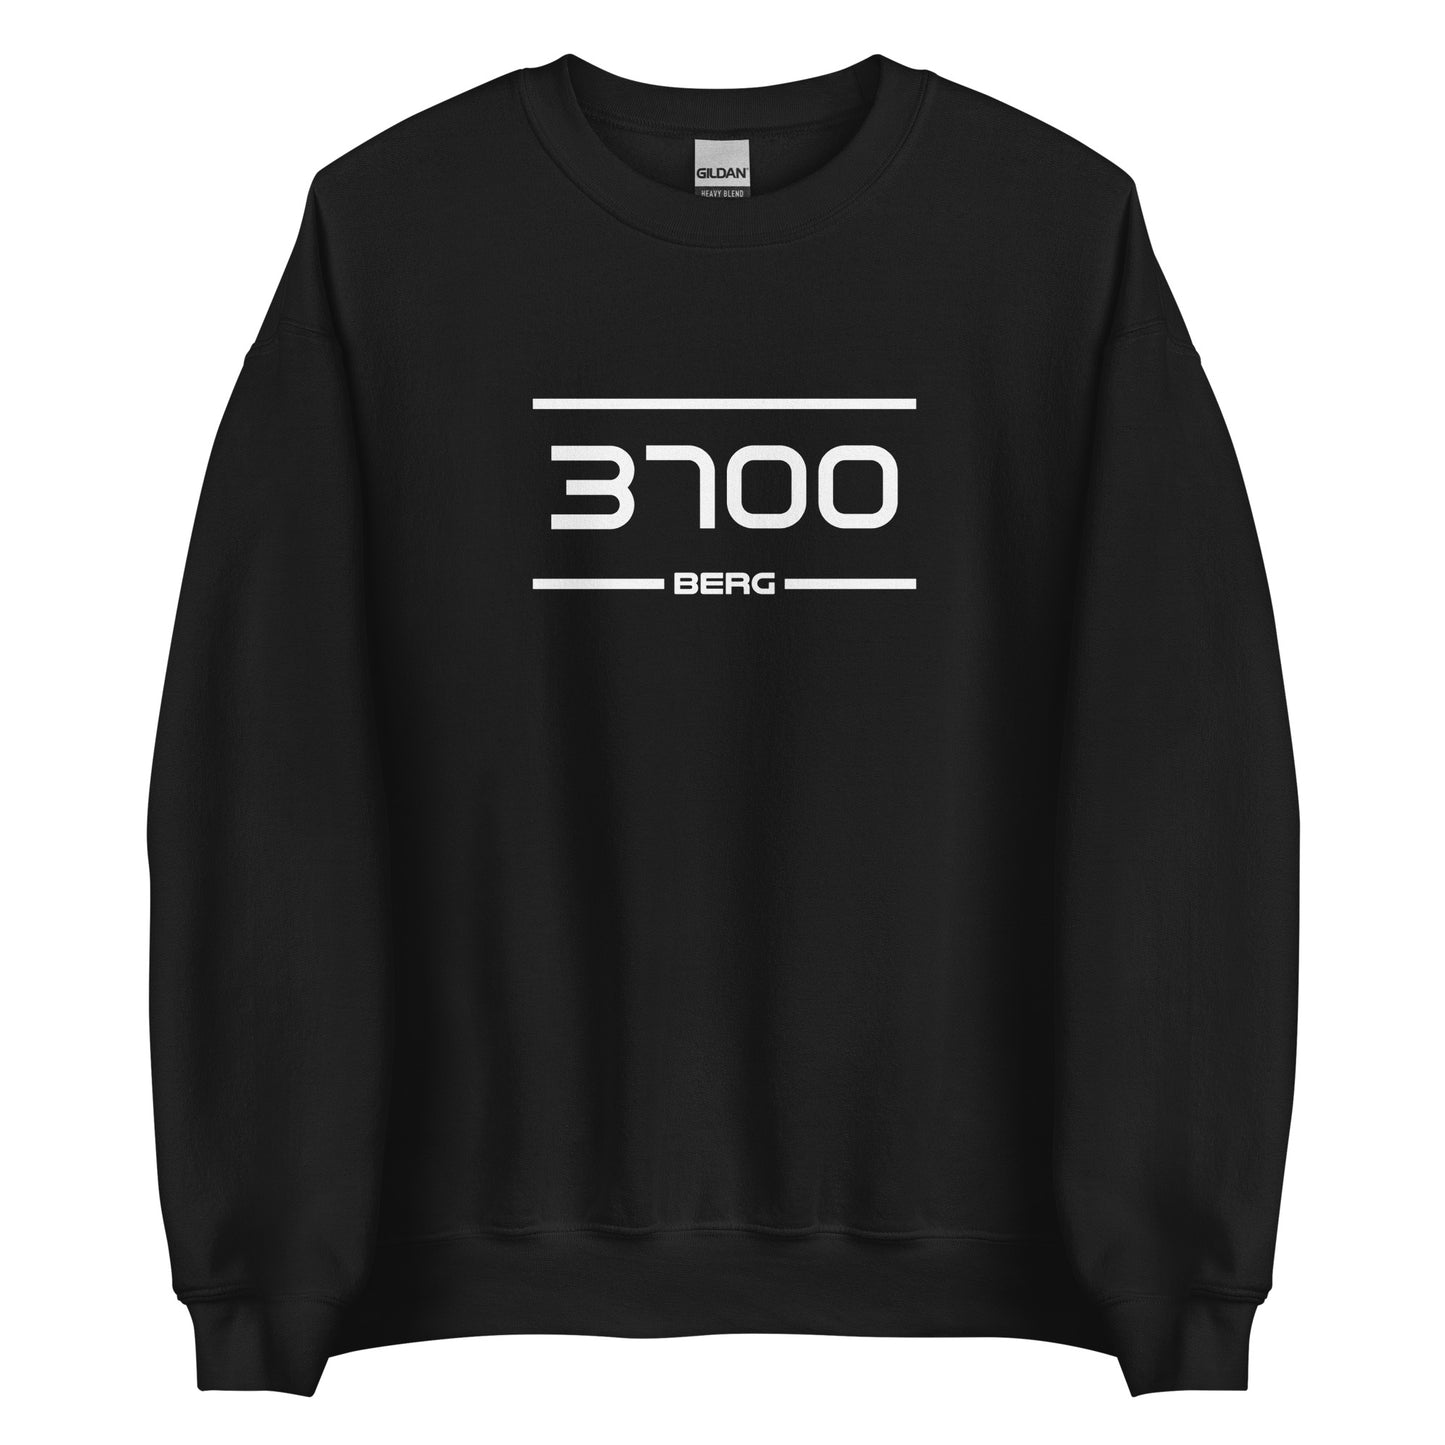 Sweater - 3700 - Berg (M/V)